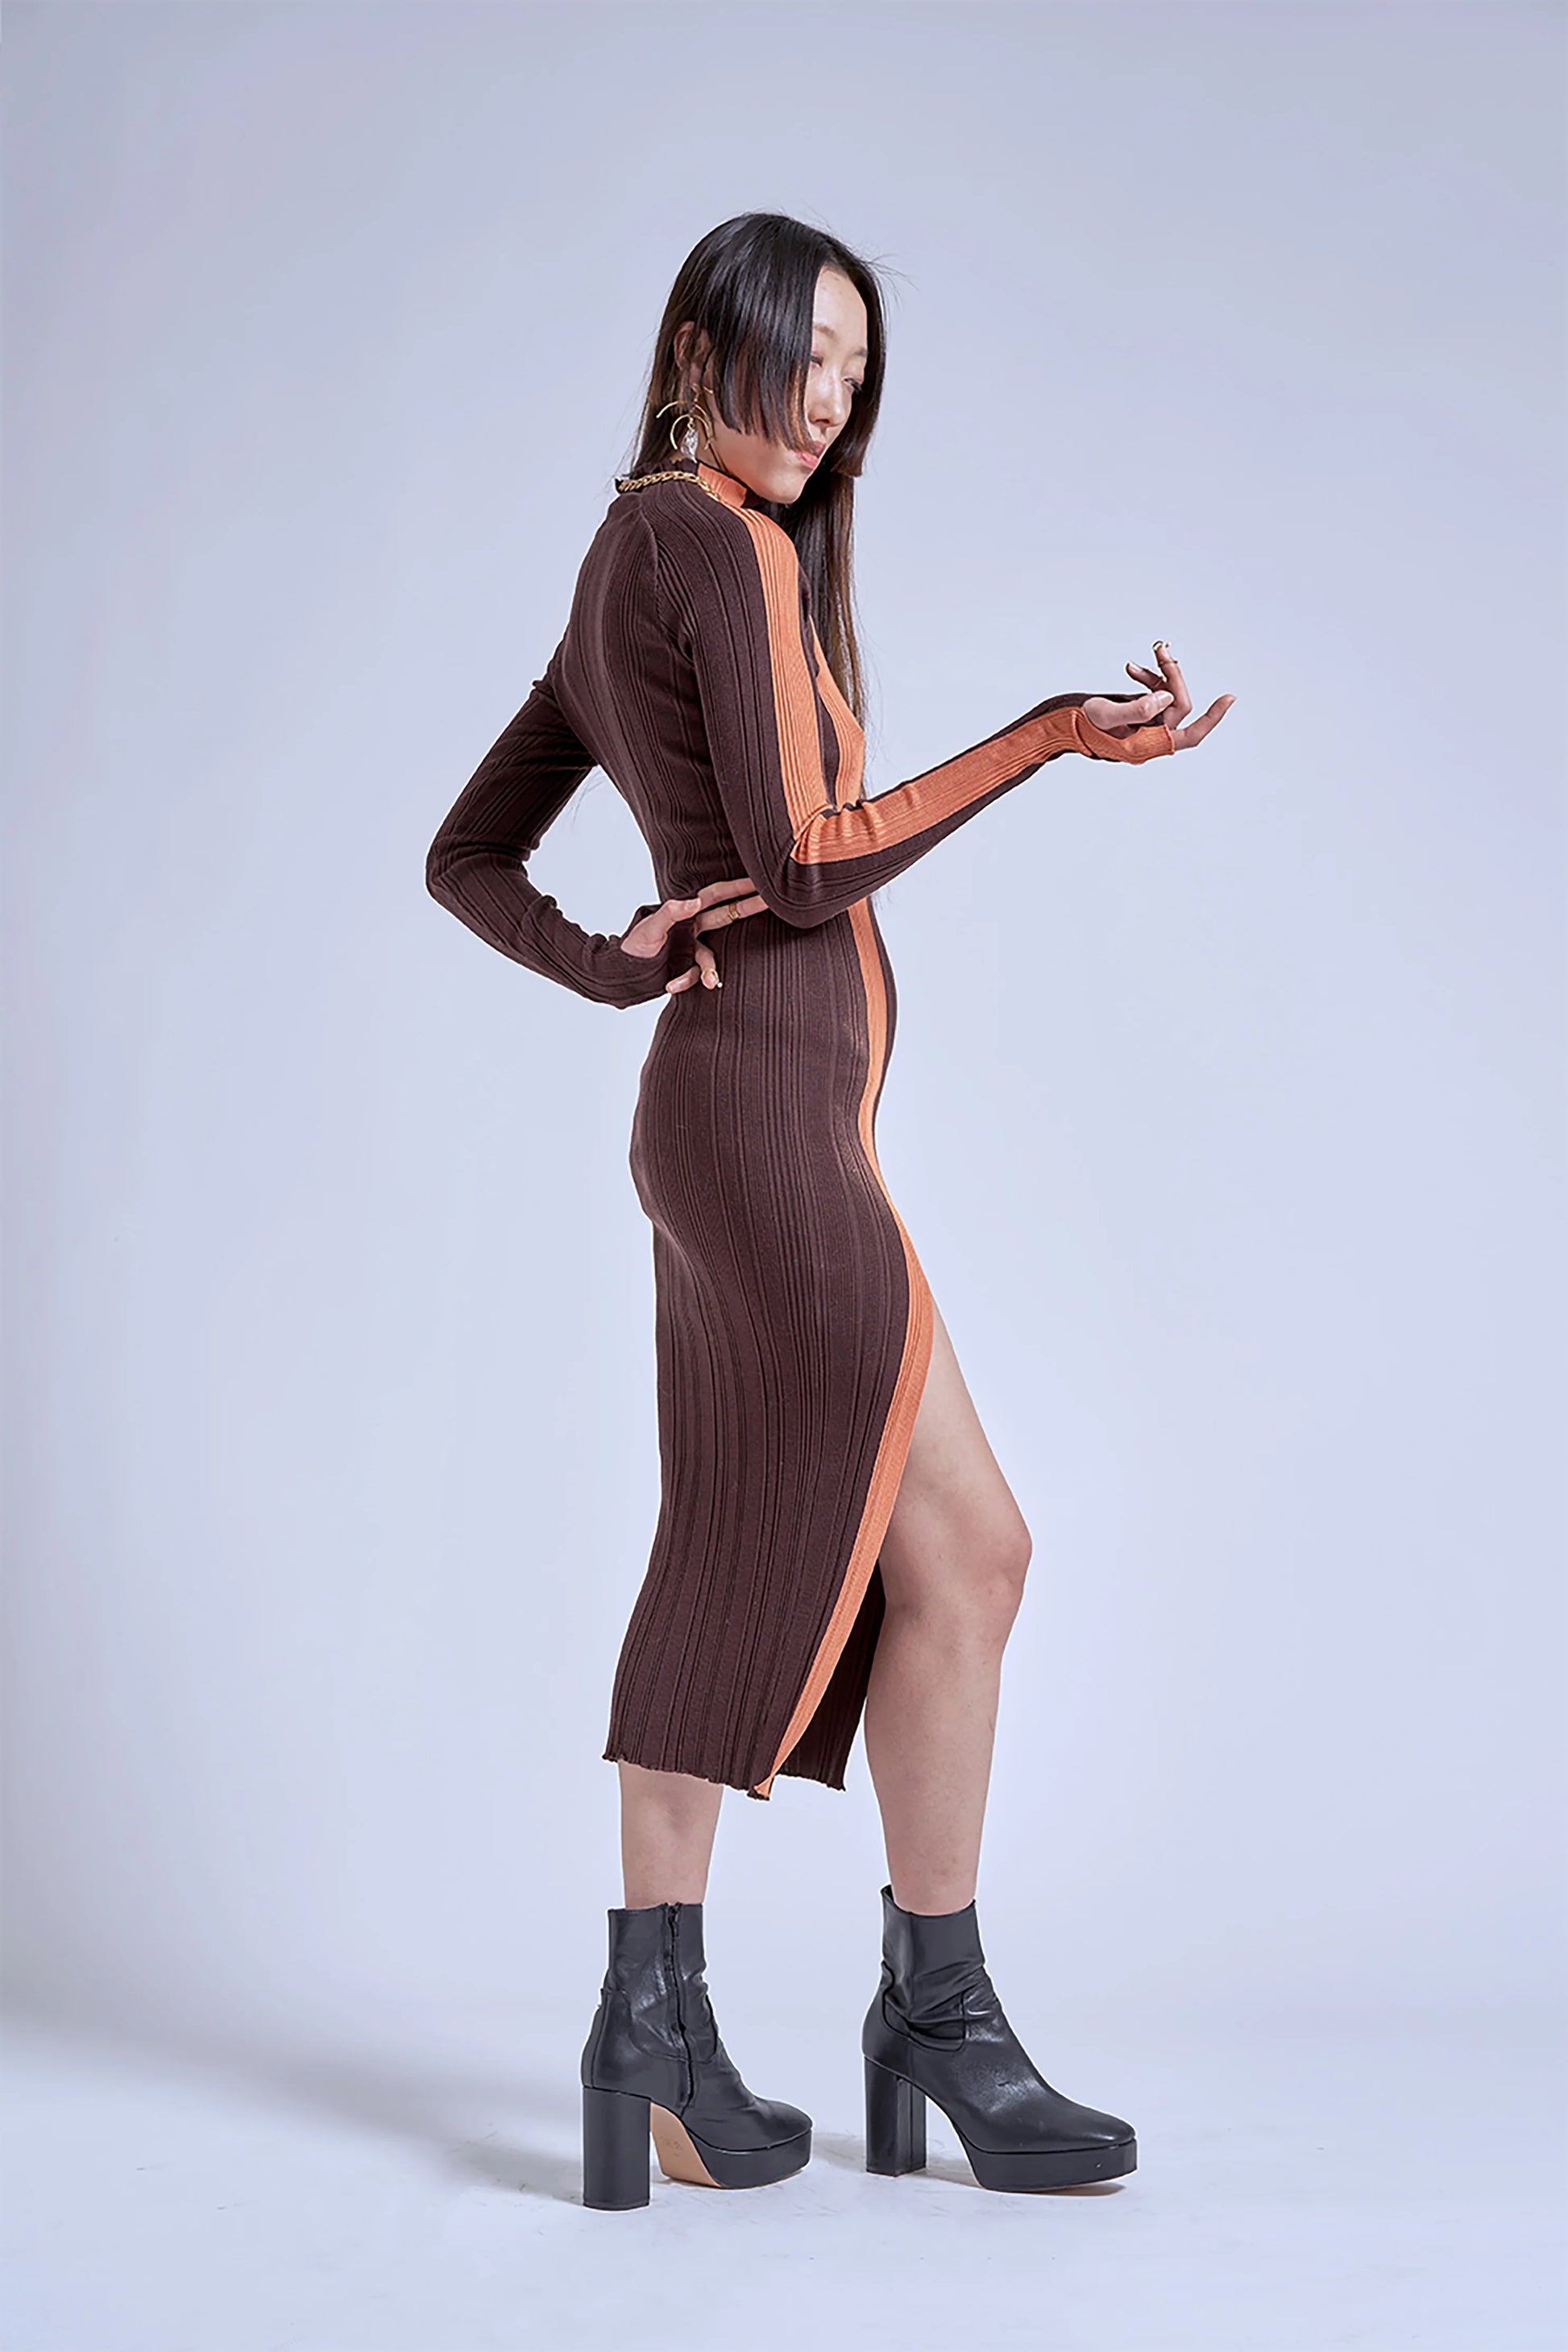 Tesei T0520 - Virgin Wool Dark Brown Dress - Above The Crowd Boutique